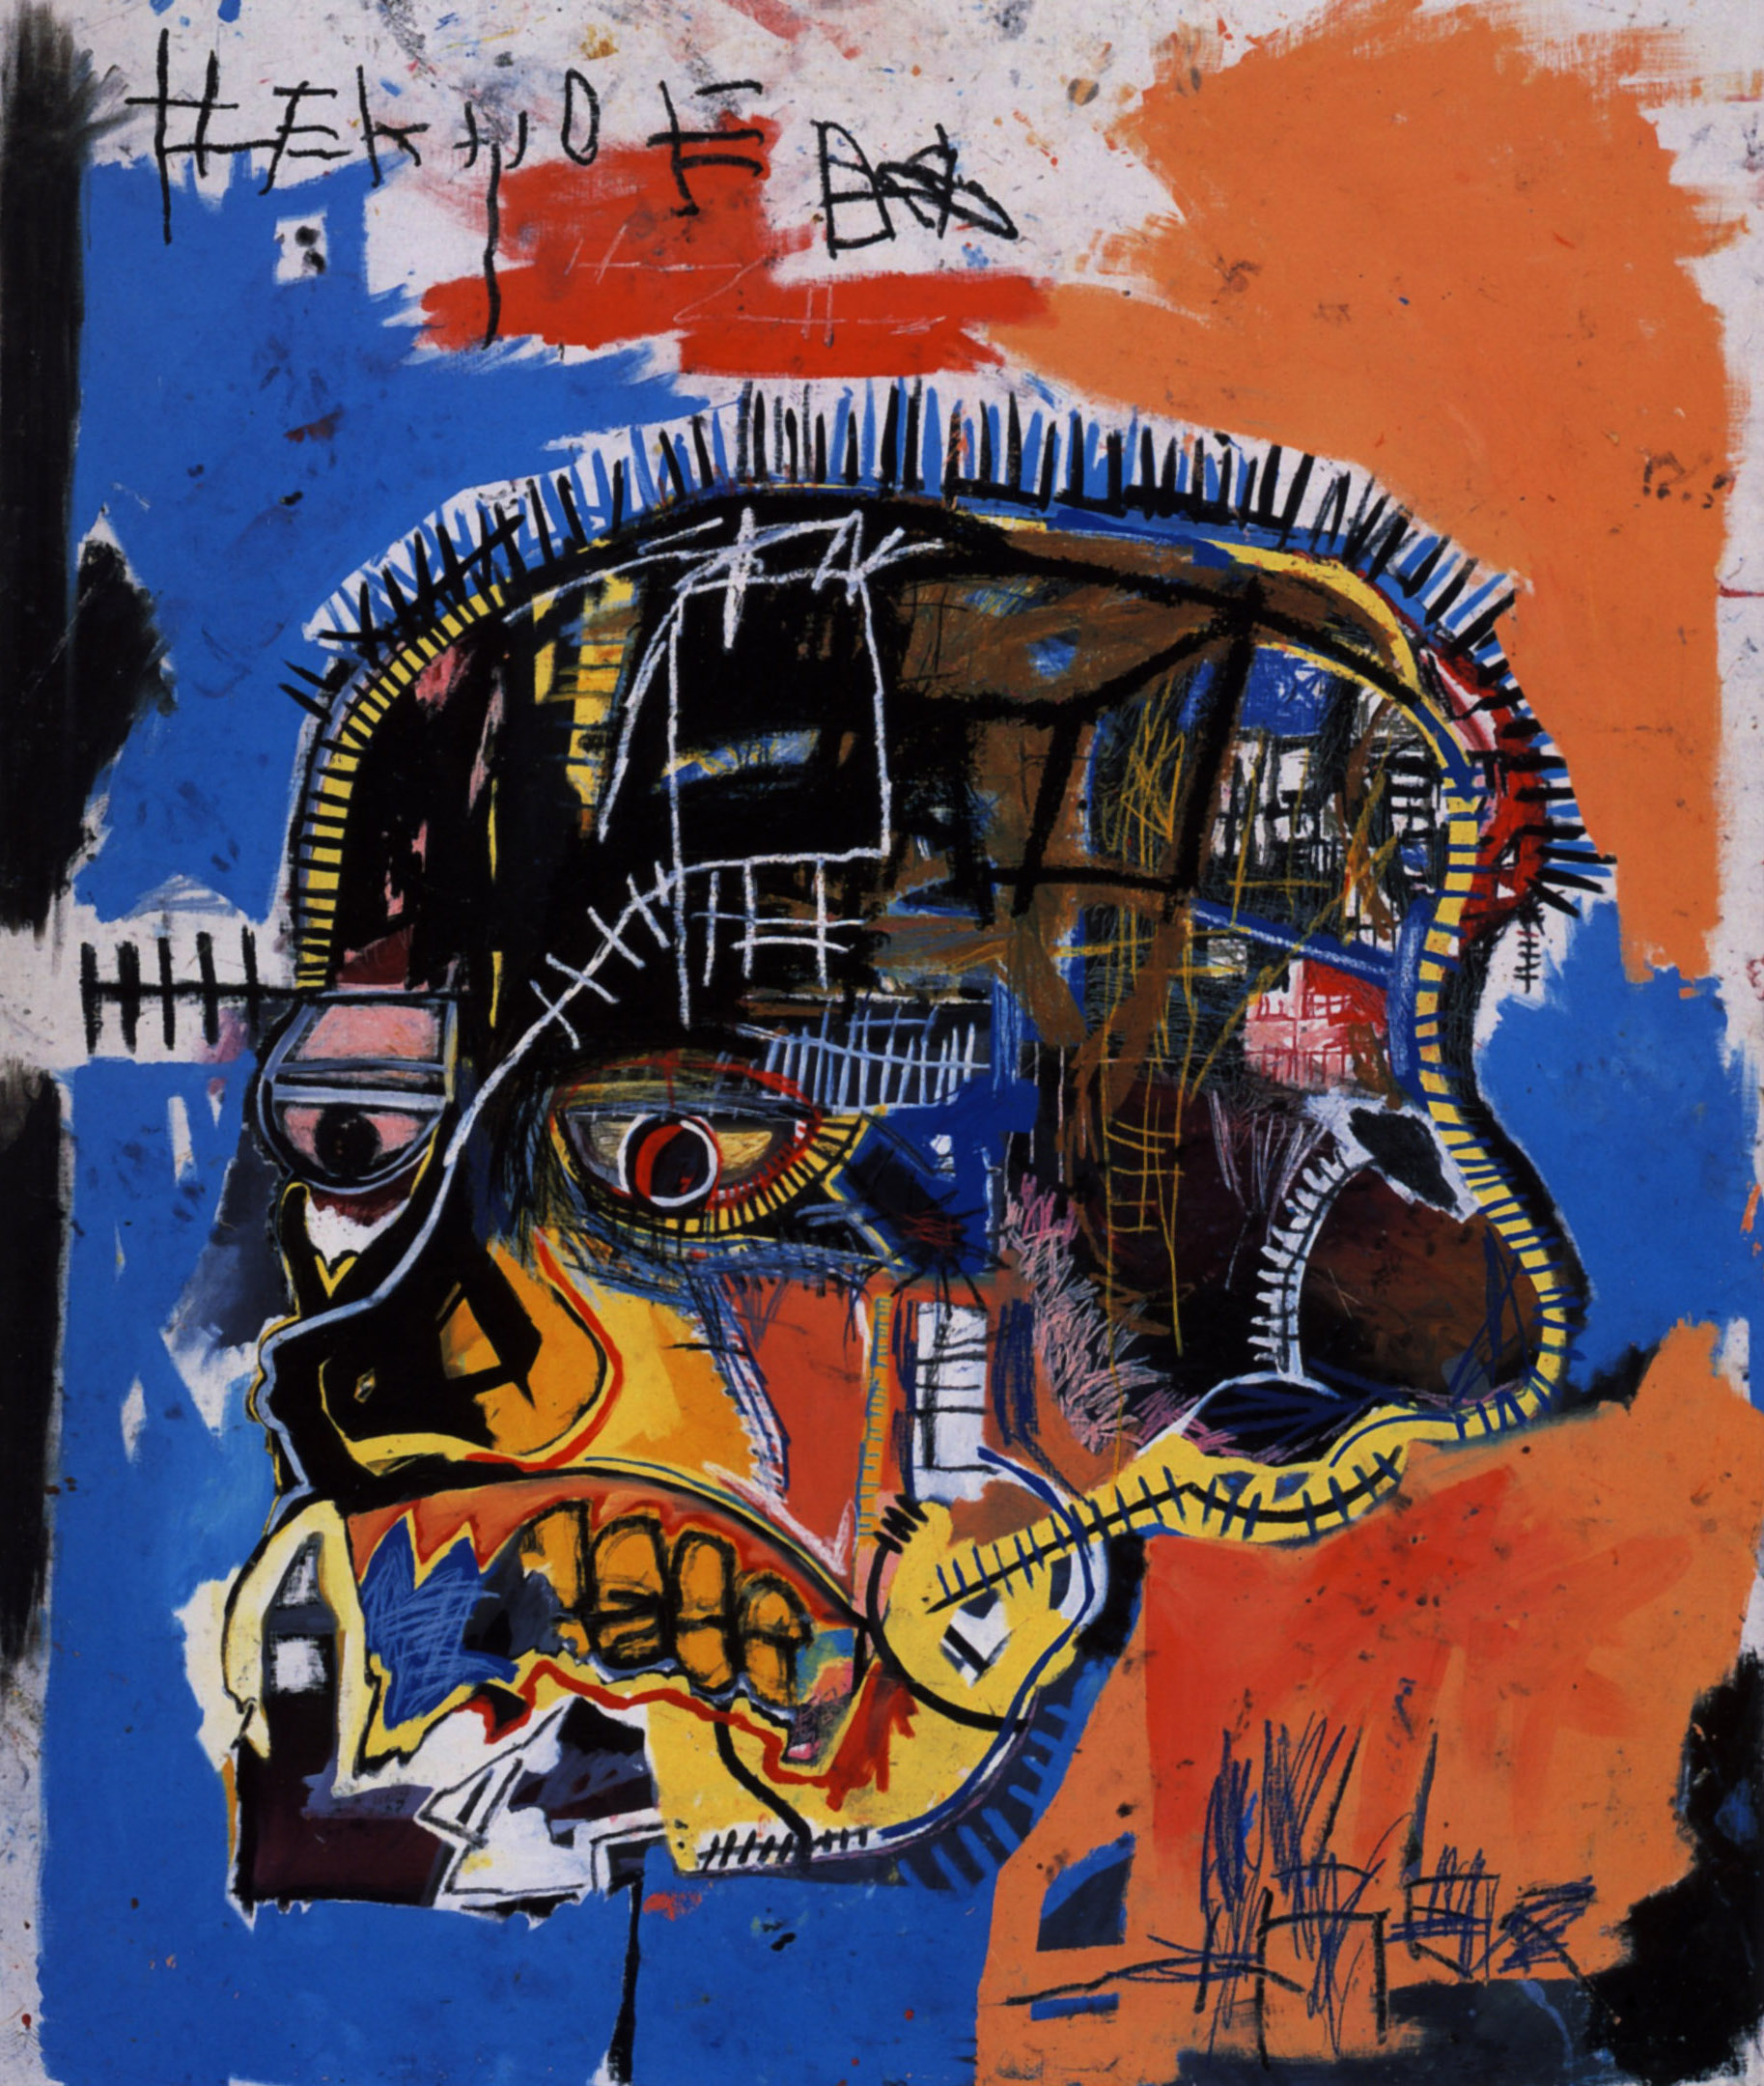 Jean-Michel Basquiat. "Scull" (1981). Acrylic,&nbsp;crayon,&nbsp;canvas.&nbsp;175.9 x 207 cm. Courtesy the Broad, Los Angeles.